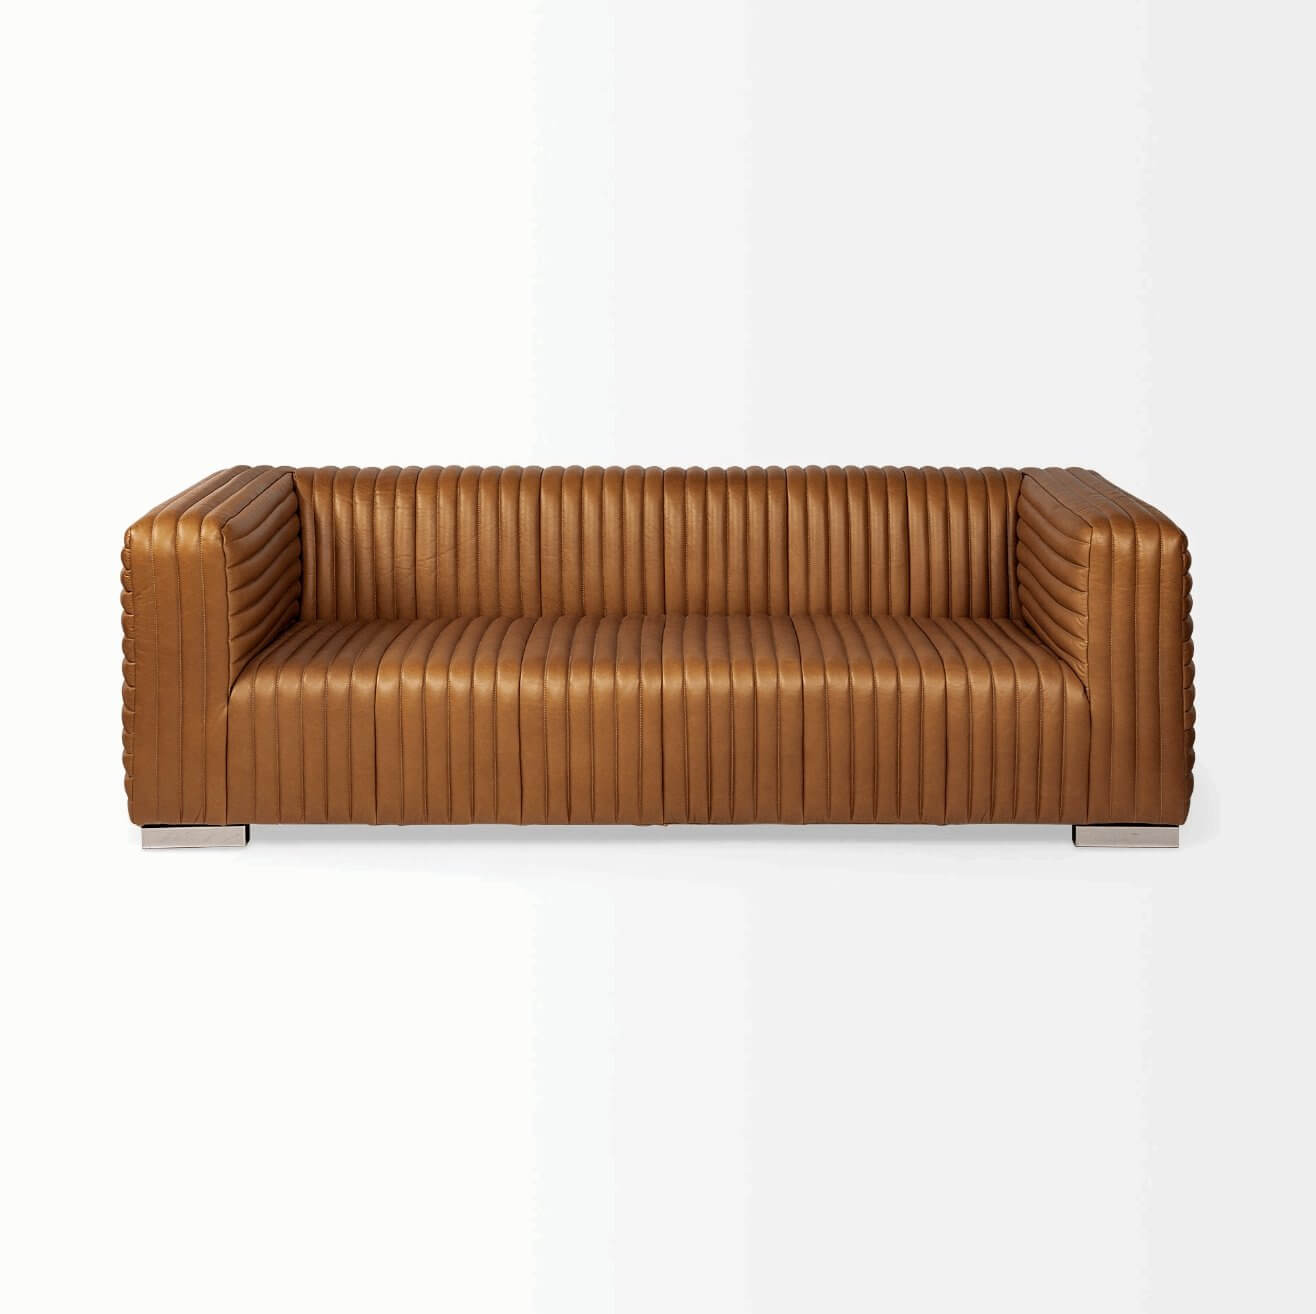 Luxury Genuine Cognac Leather Wrapped Three Seater Sofa 87” - Revel Sofa 